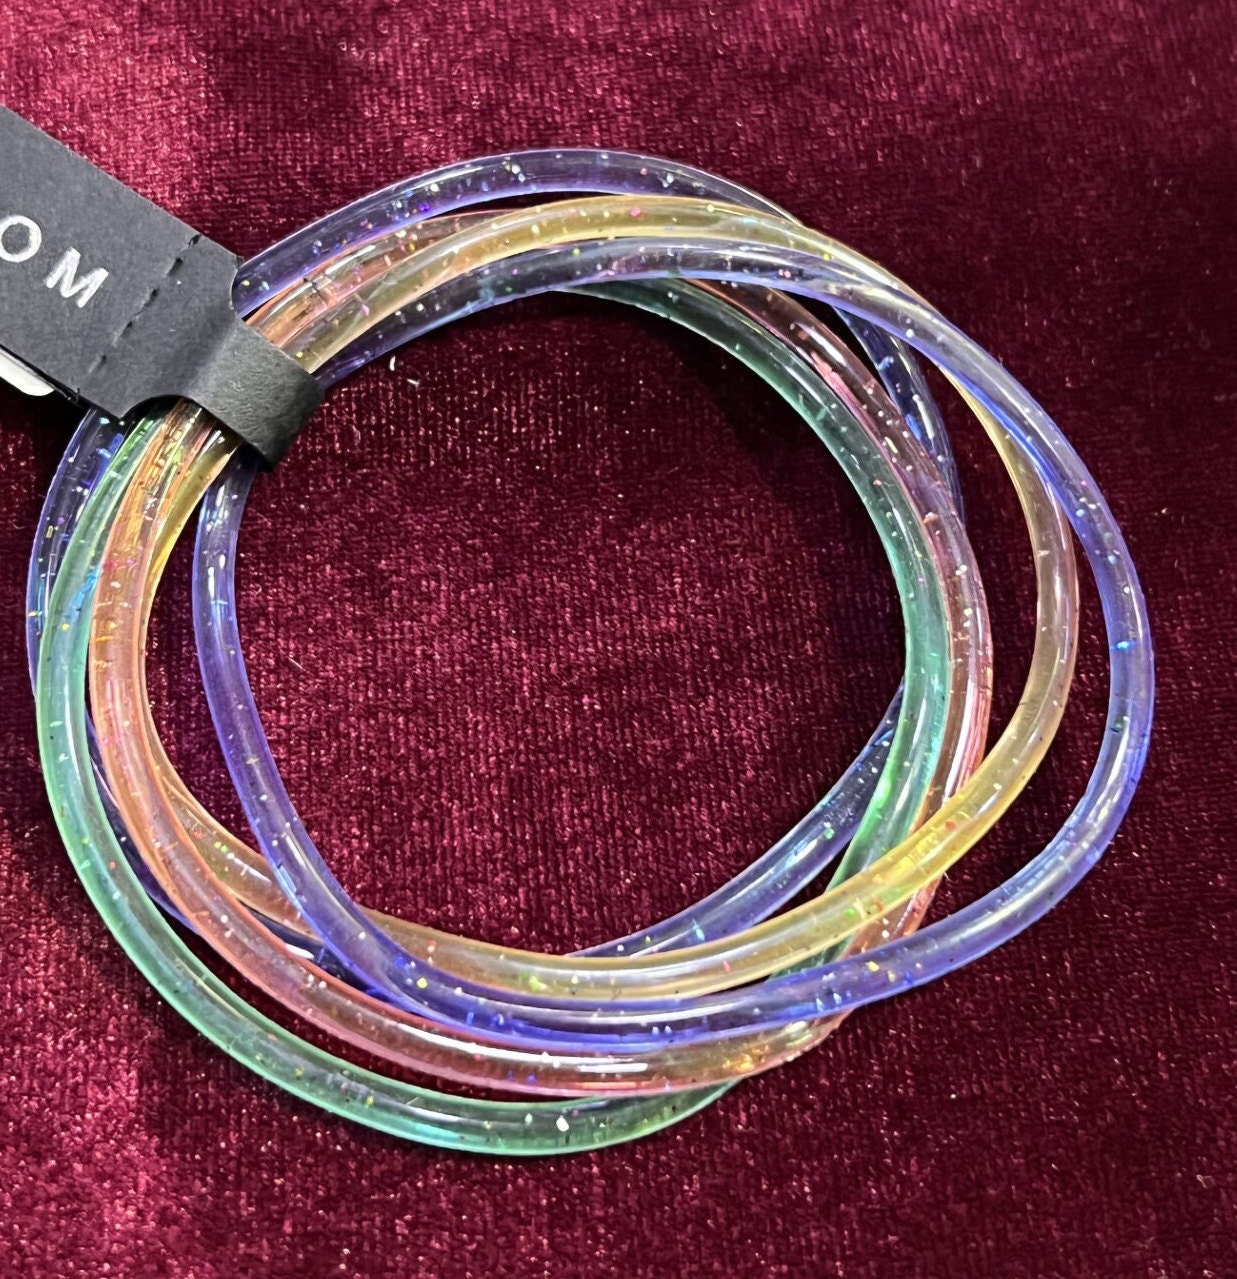 48 Pack Multi-Colored Silicone Bracelets Bulk Set for Sports Teams